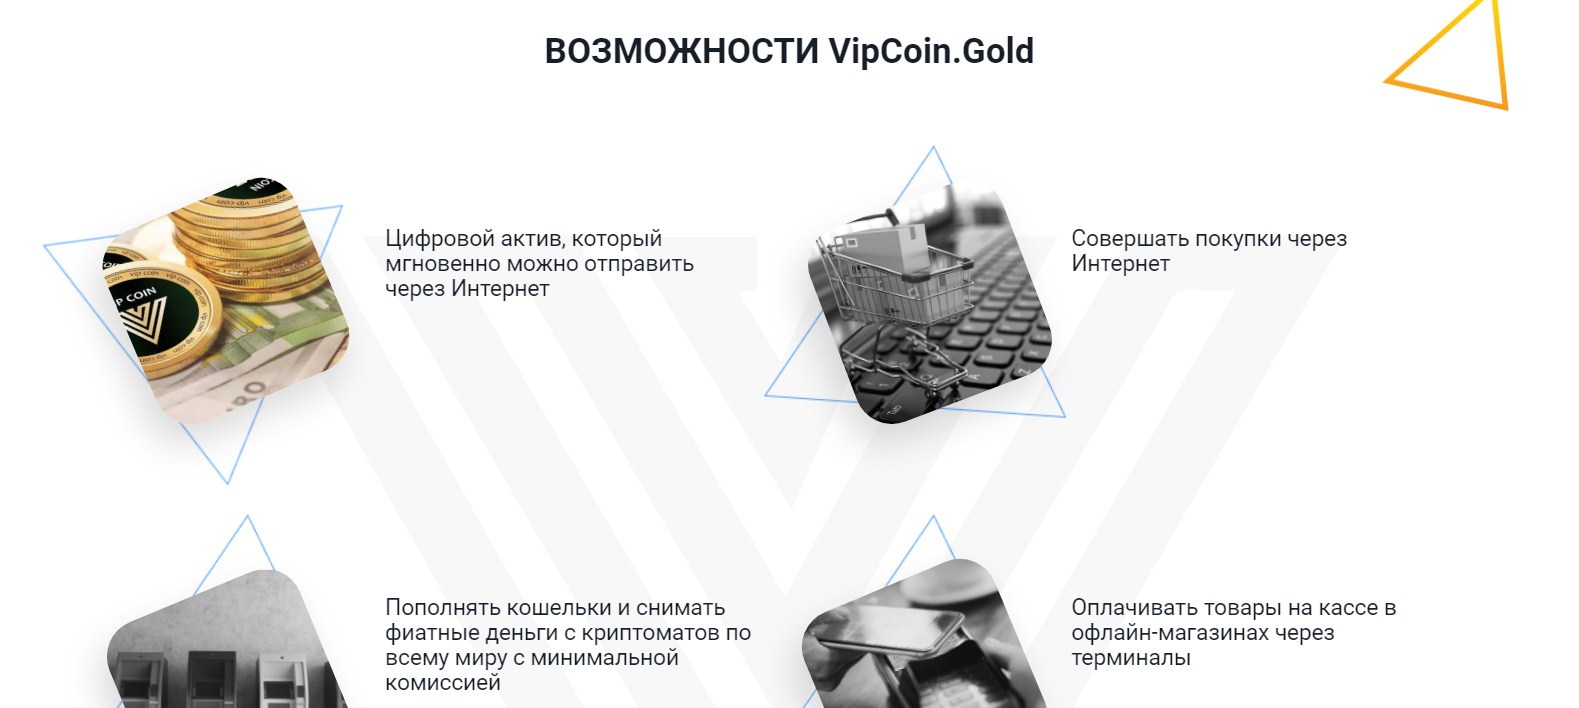 VipCoin.Gold 